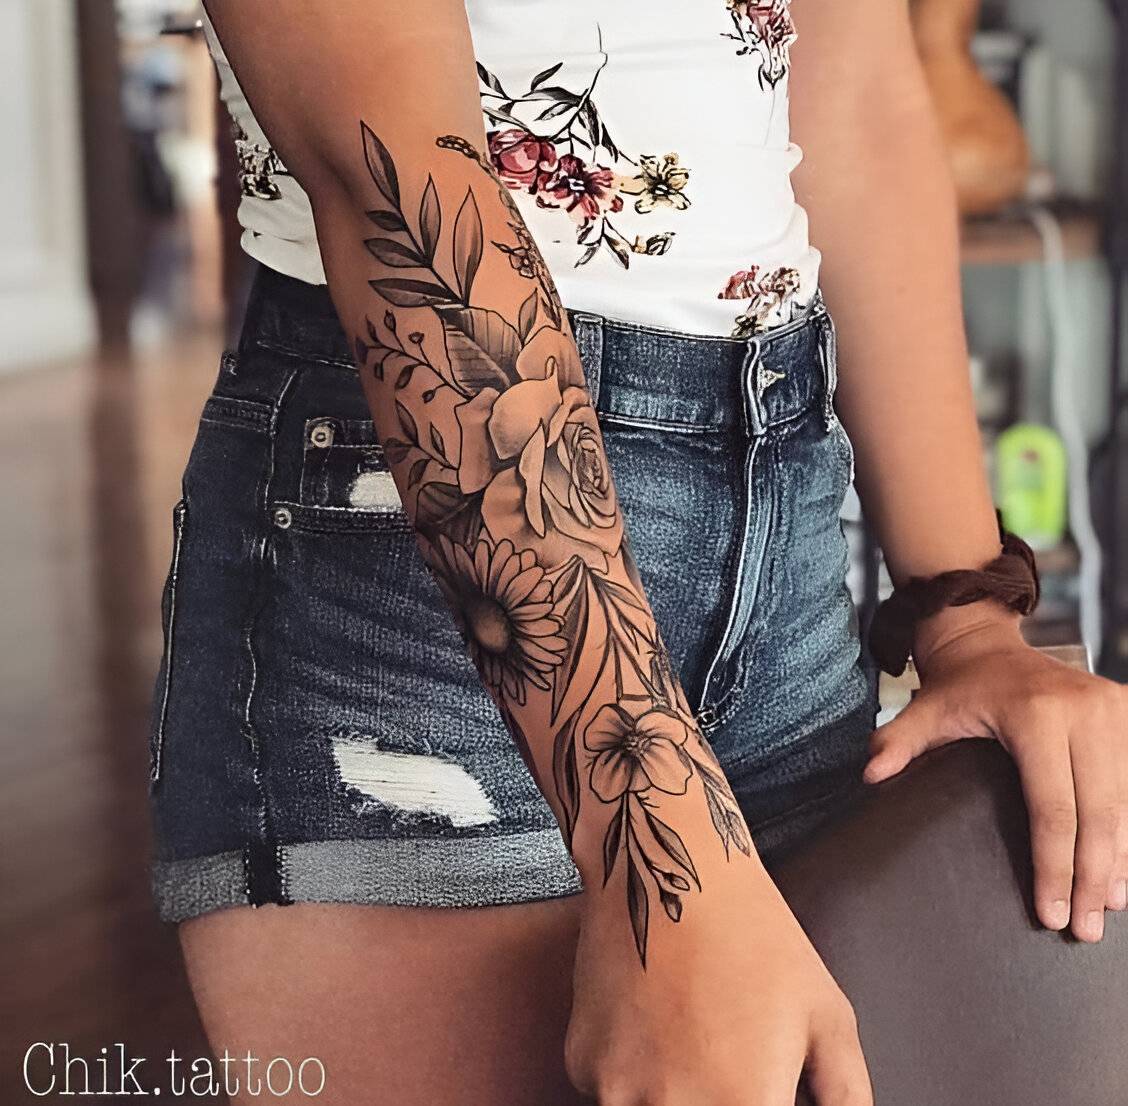 27 Stunning Forearm Tattoos To Vamp Up Your Femininity 20